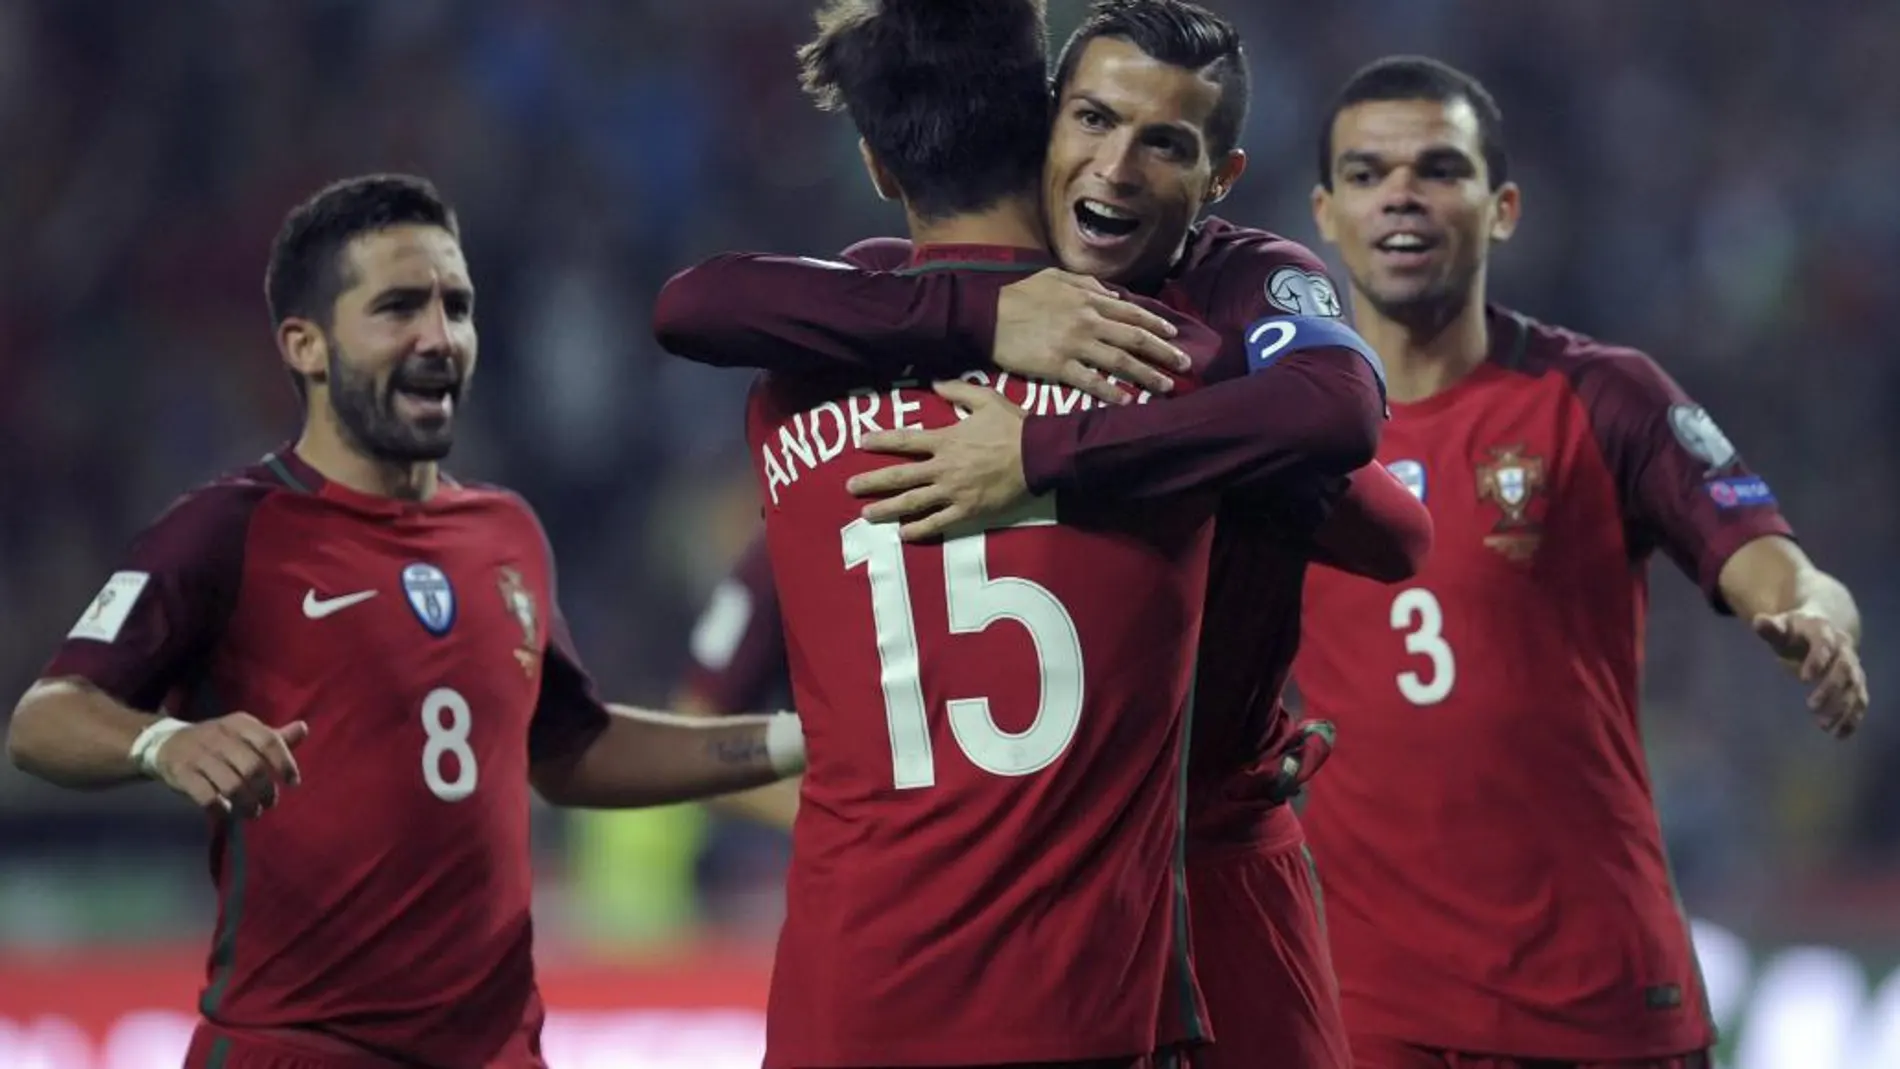 Cristiano Ronaldo celebra con Andre Gomes tras marcar un gol a la selección de Andorra